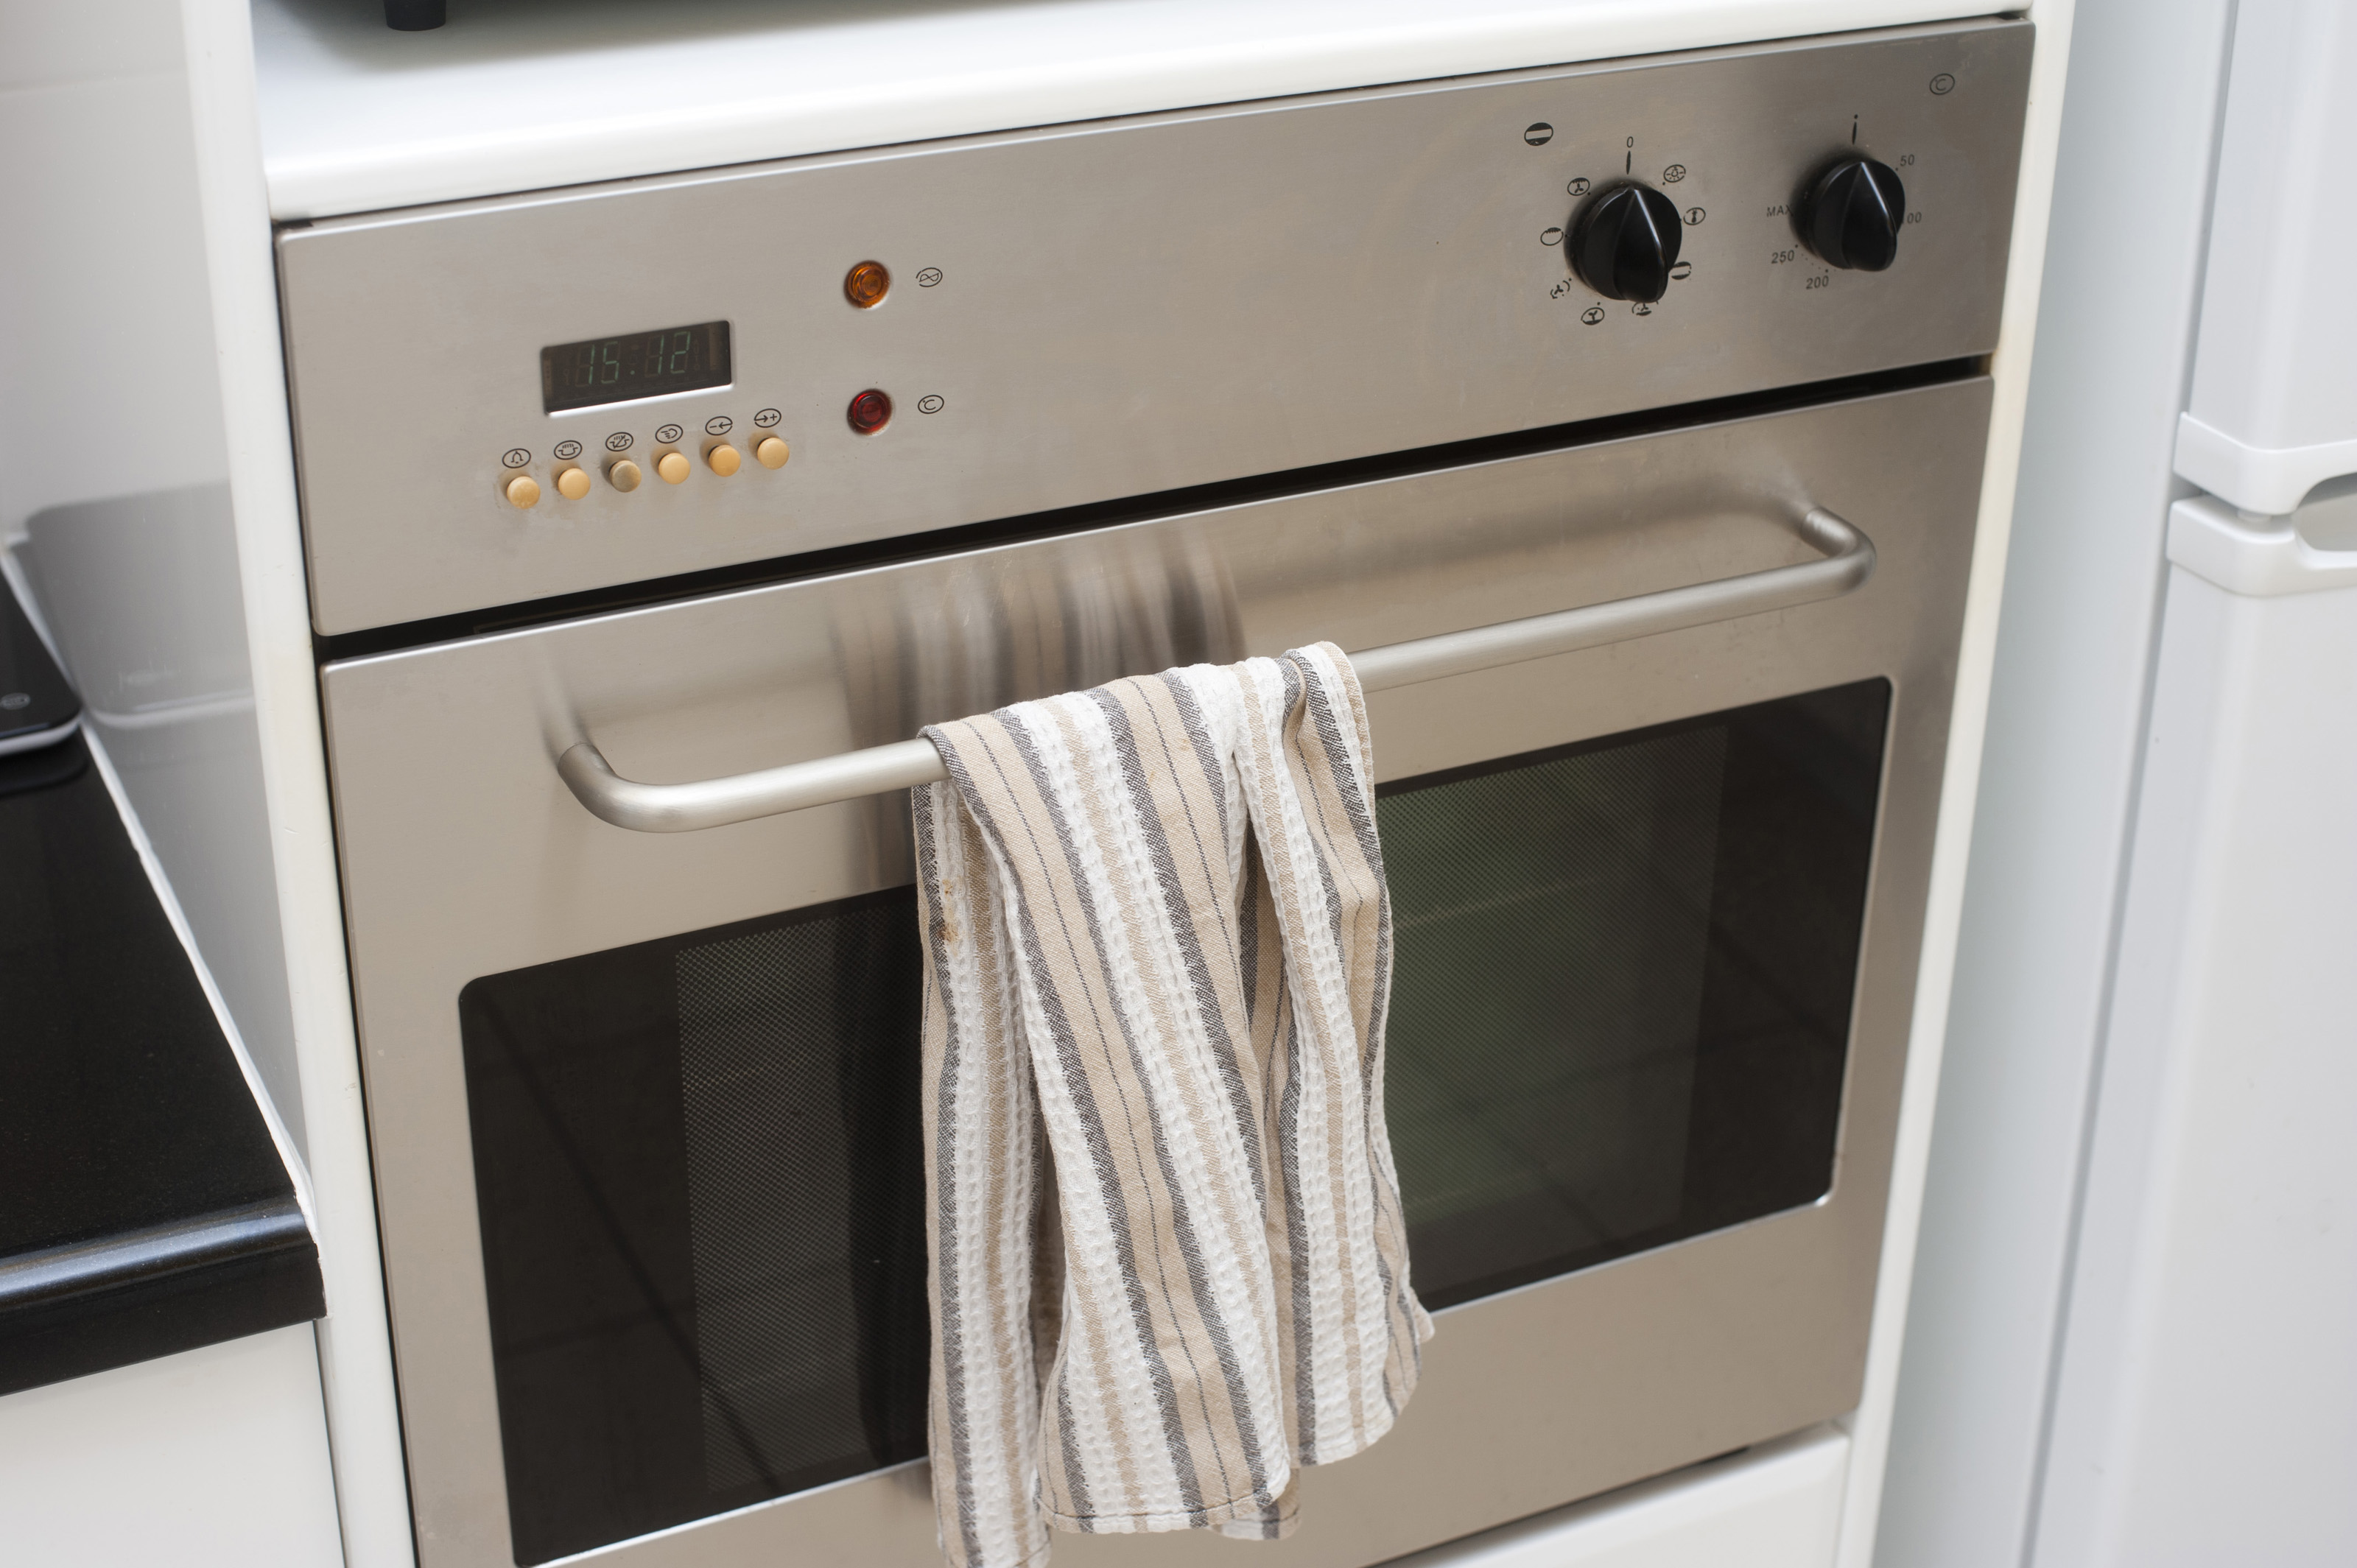 Free Image of Dish Towel Hanging on Door of Modern Oven